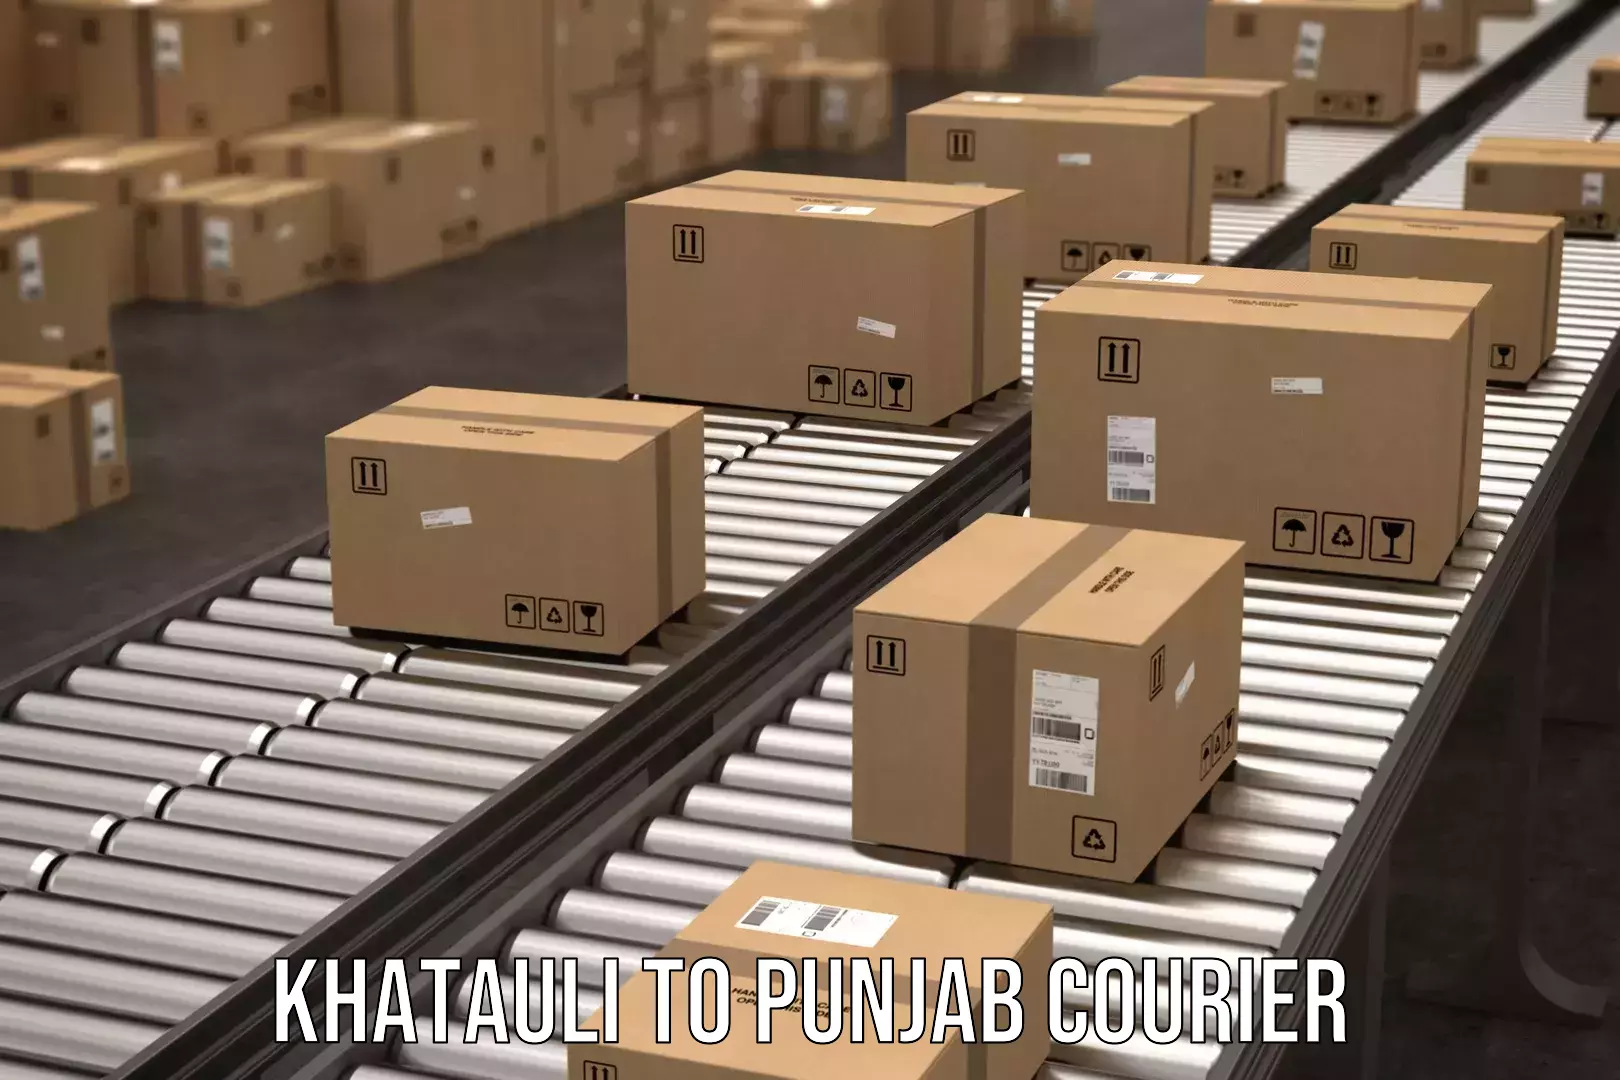 Courier service innovation Khatauli to Punjab